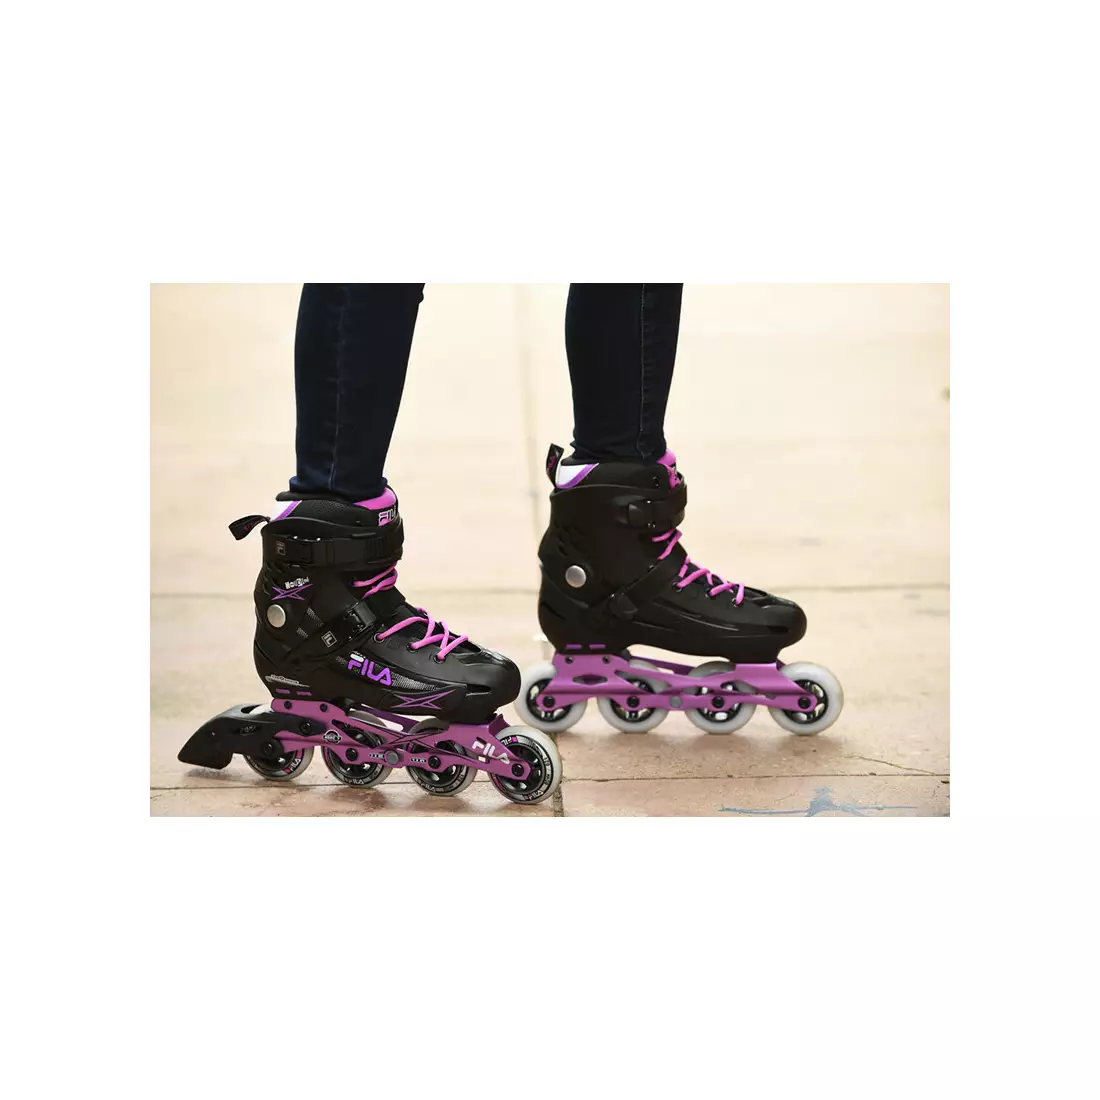 FILA SKATES women's inline skates MADAME HOUDINI black/purple 10619085370